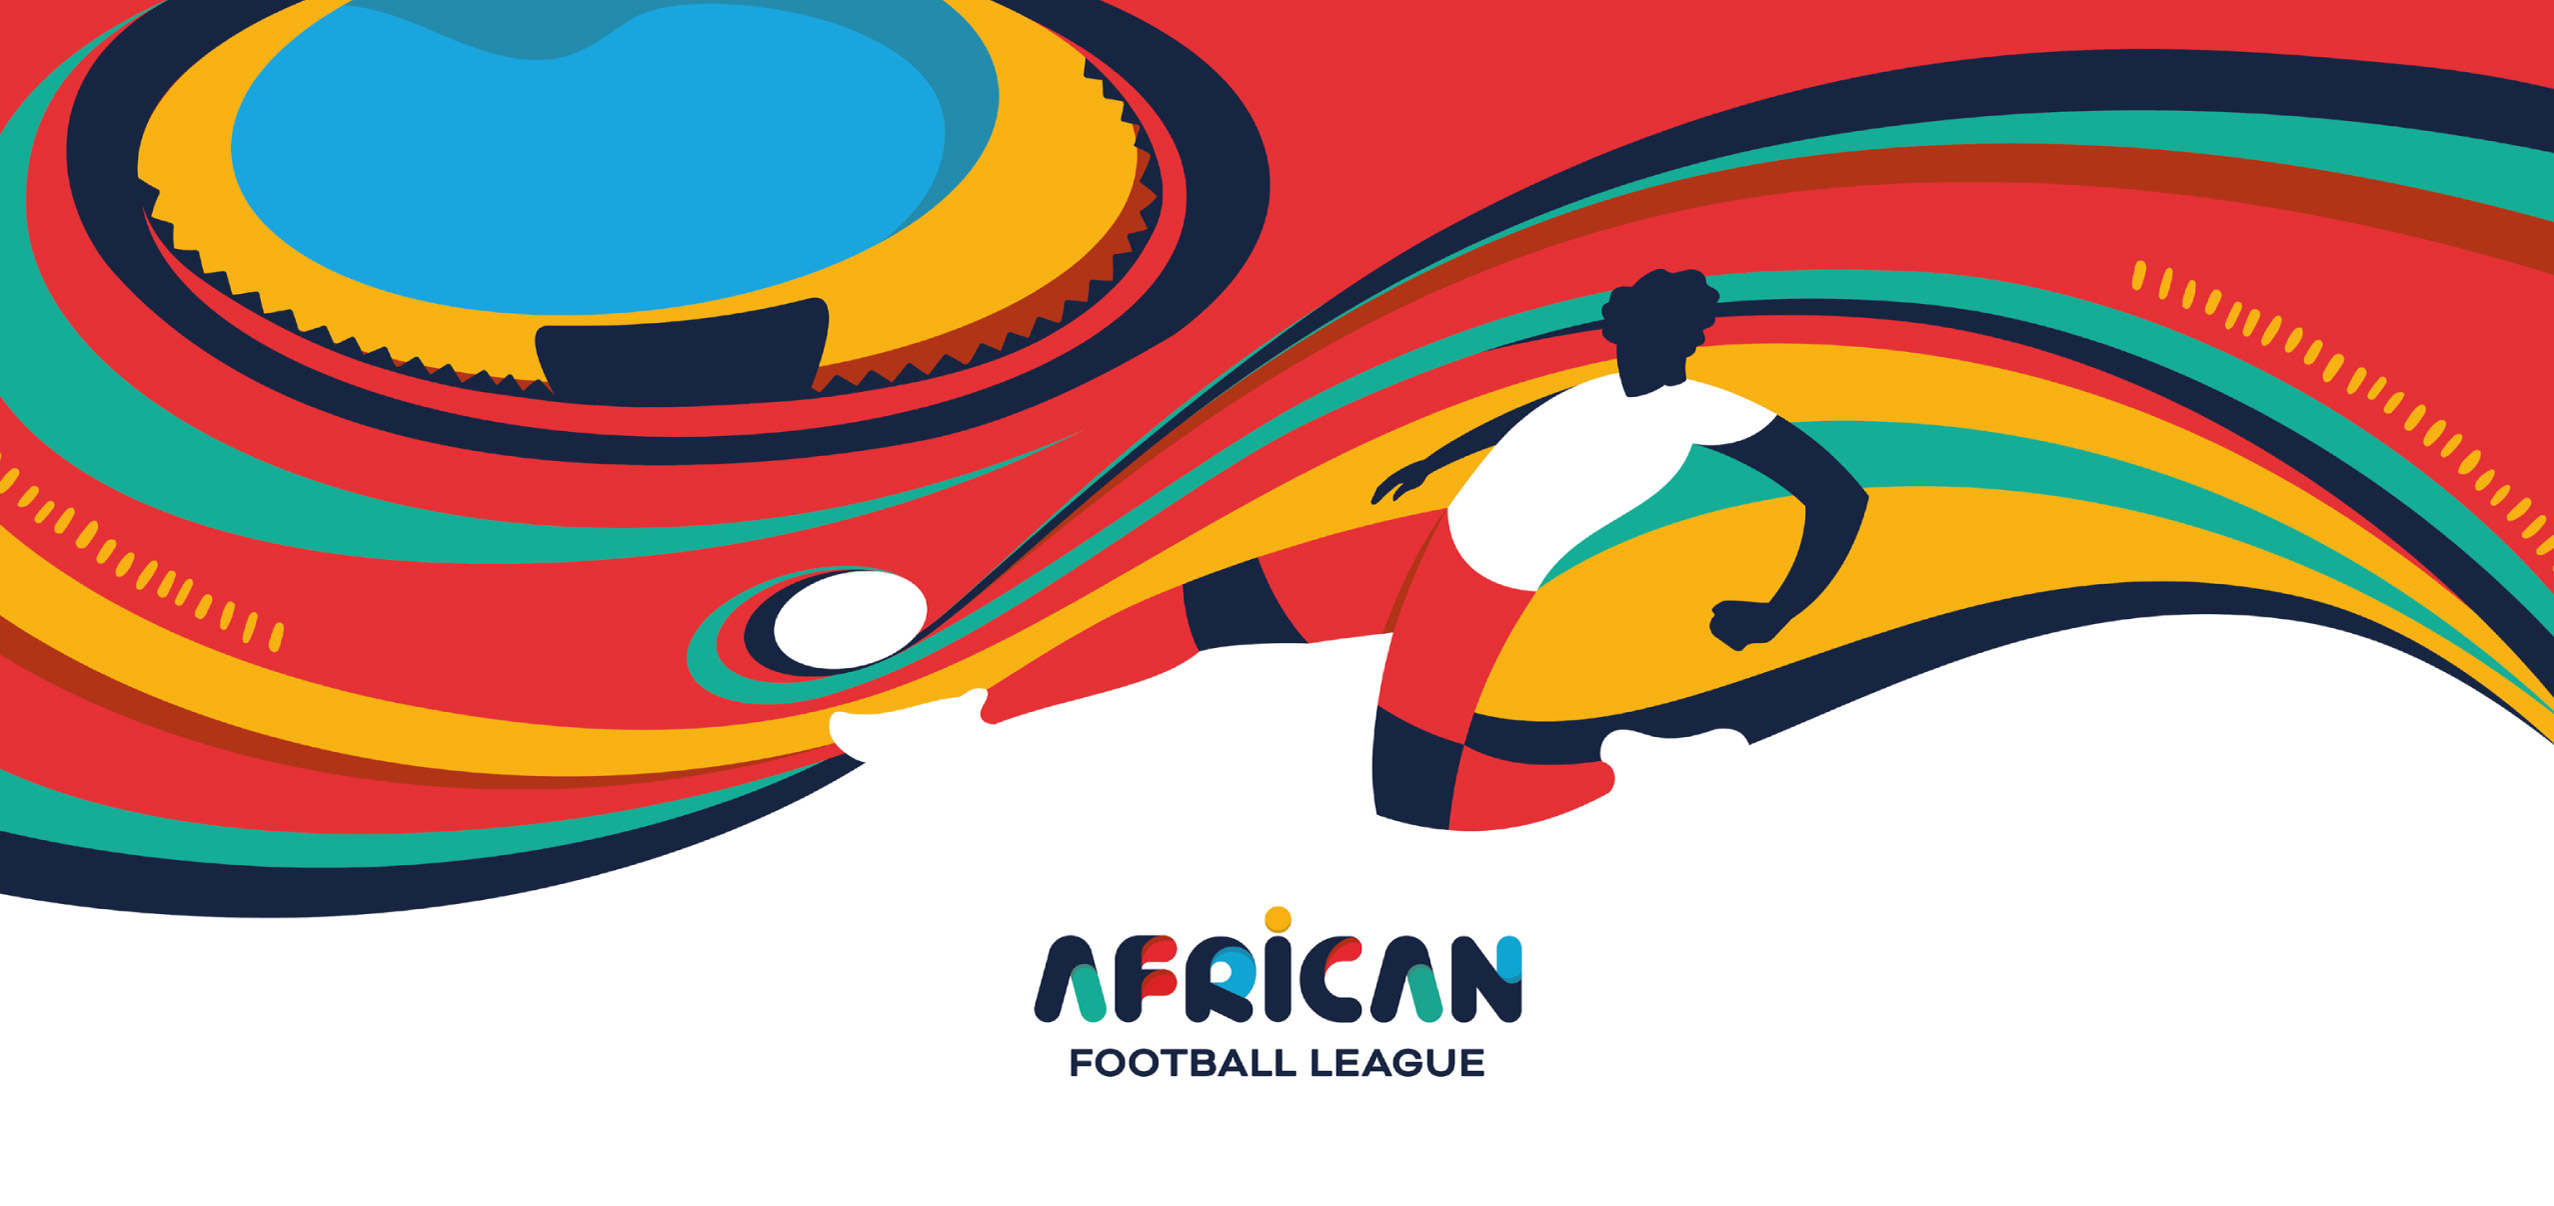 African Football League - AFL - TRIBAL IMAGE